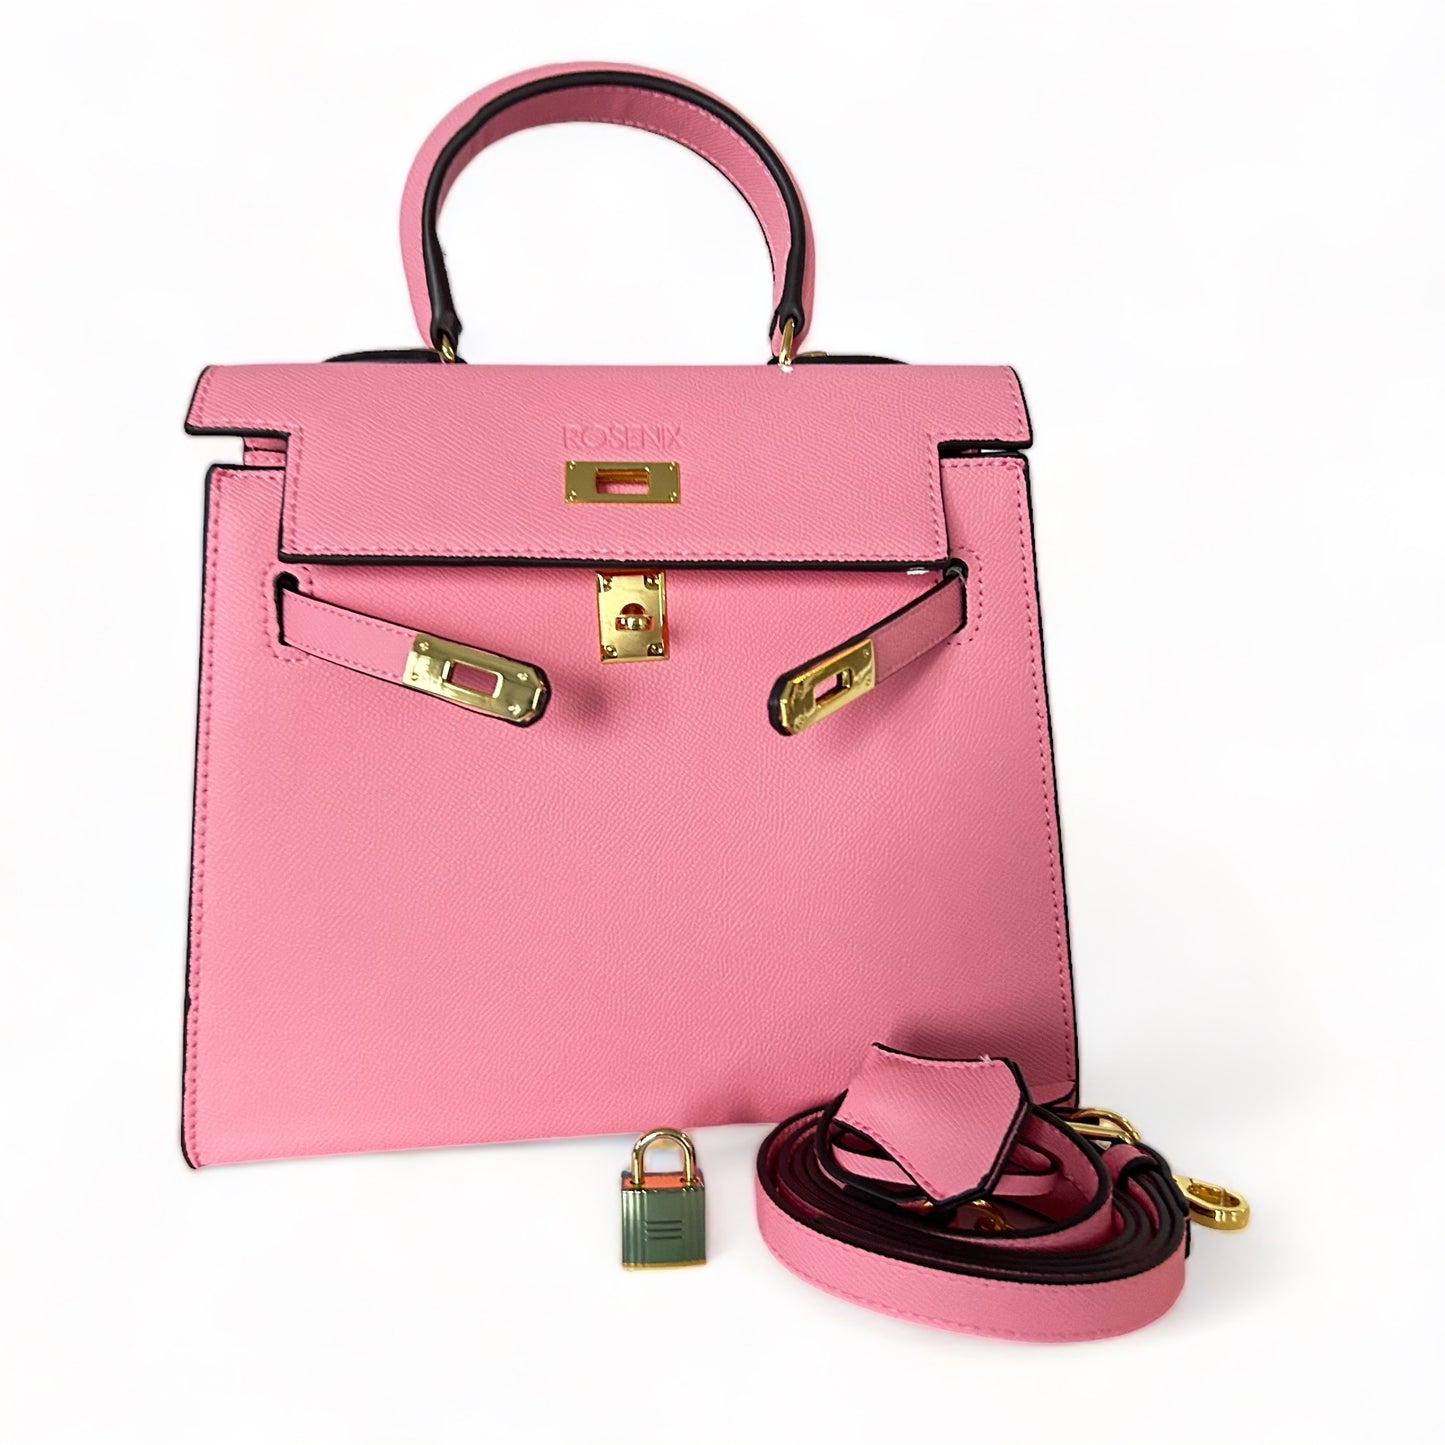 Pink Leah Vegan Leather Purse - Rosenix